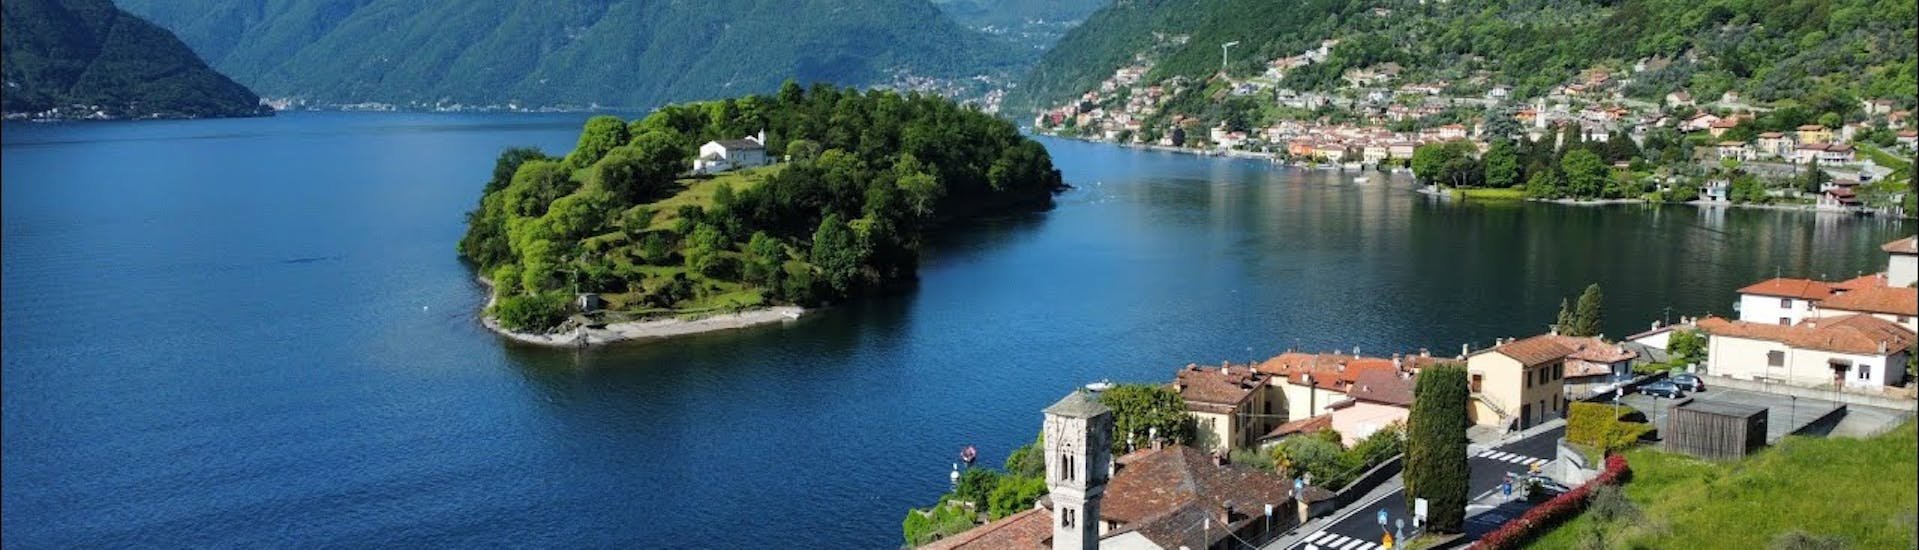 Boat Trip around Lake Como from Como to Varenna.